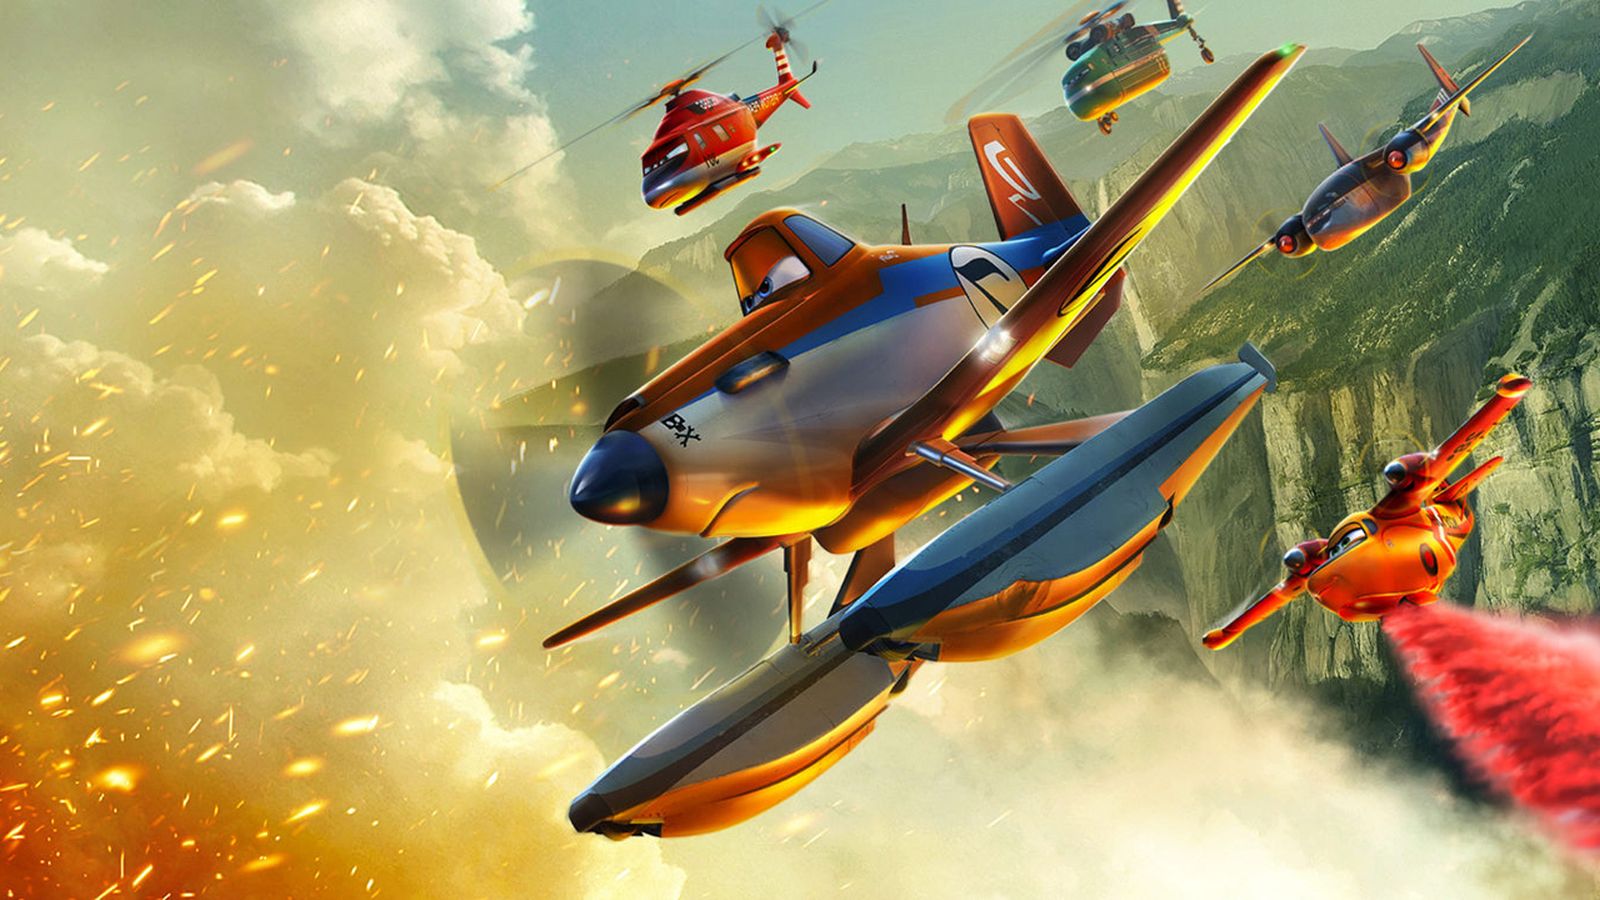 Hd desktop movie planes fire rescue download free picture